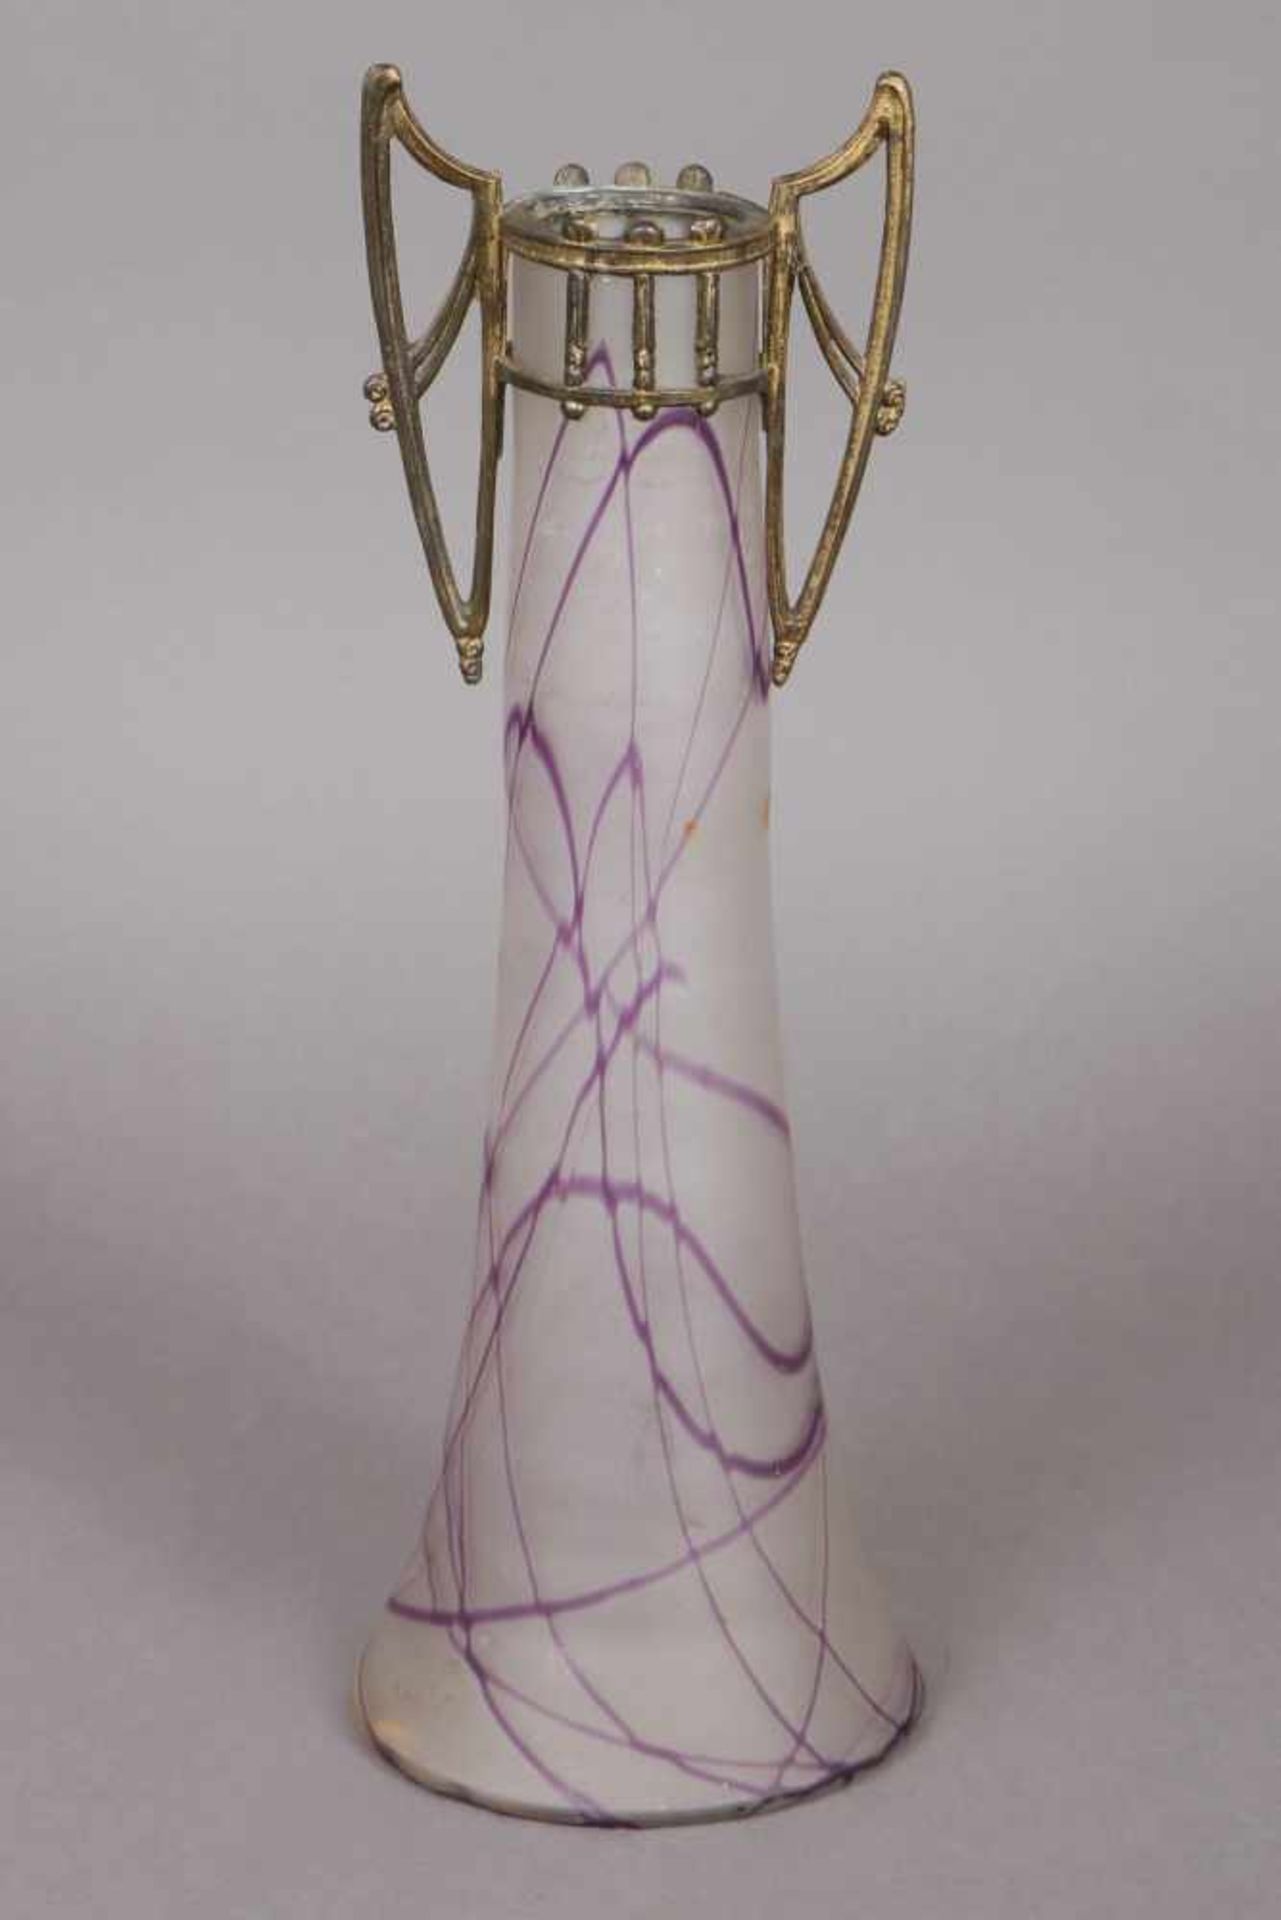 Jugendstil Vase wohl Kralik, Böhmen, um 1900, hoher Milchglaskorpus mit violetten